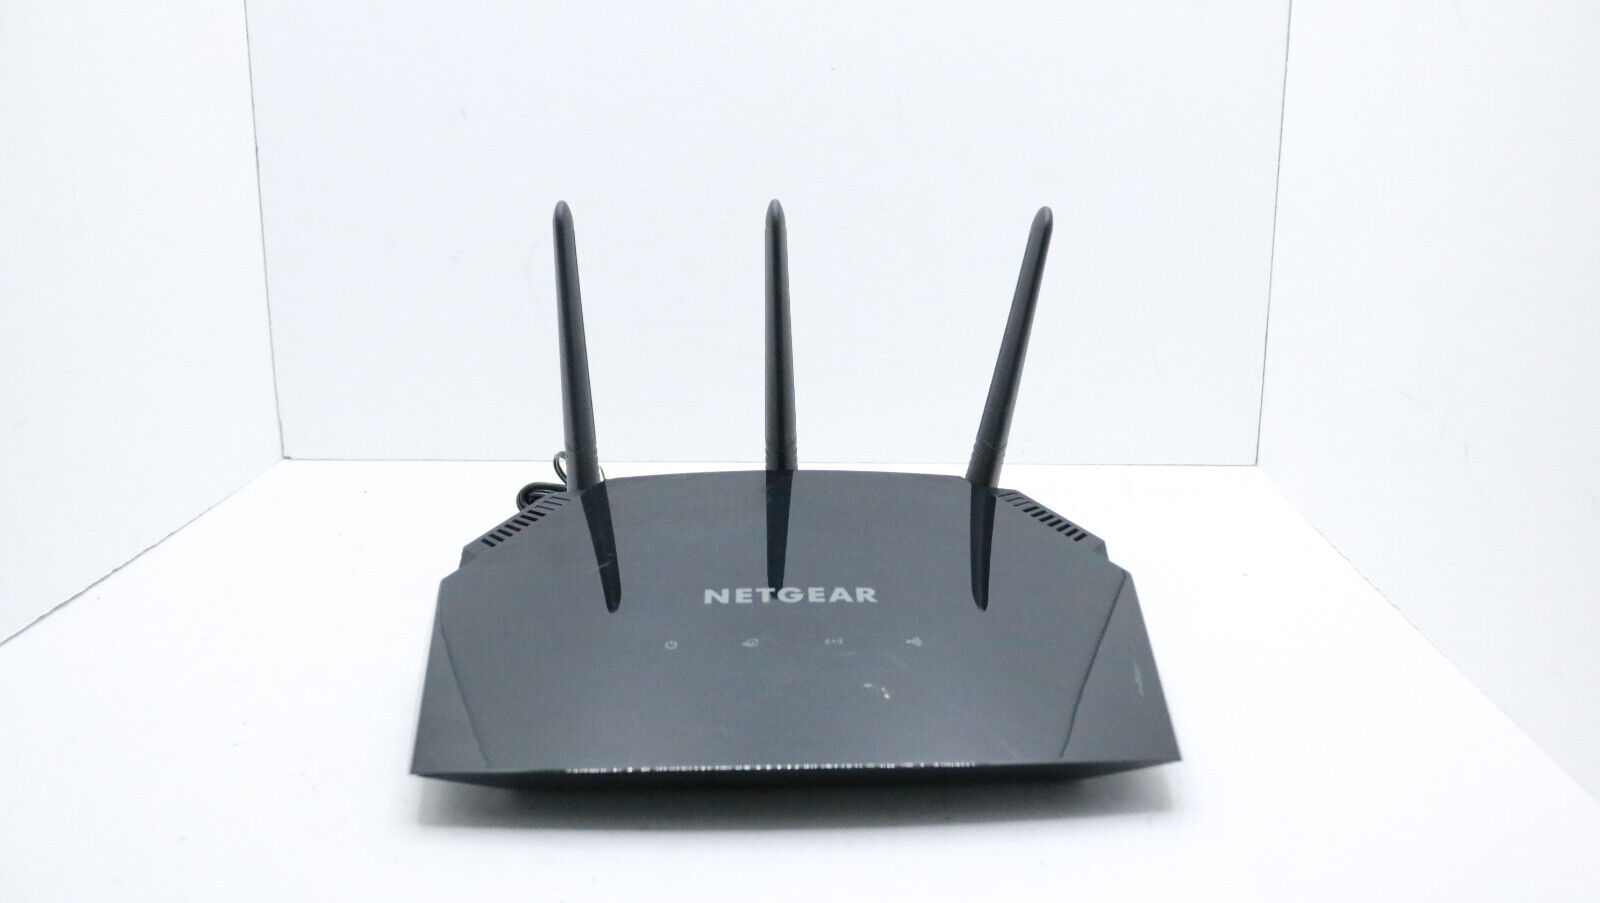 NETGEAR AC1750 Smart WiFi Router 5 Dual Band Gigabit (R6350)